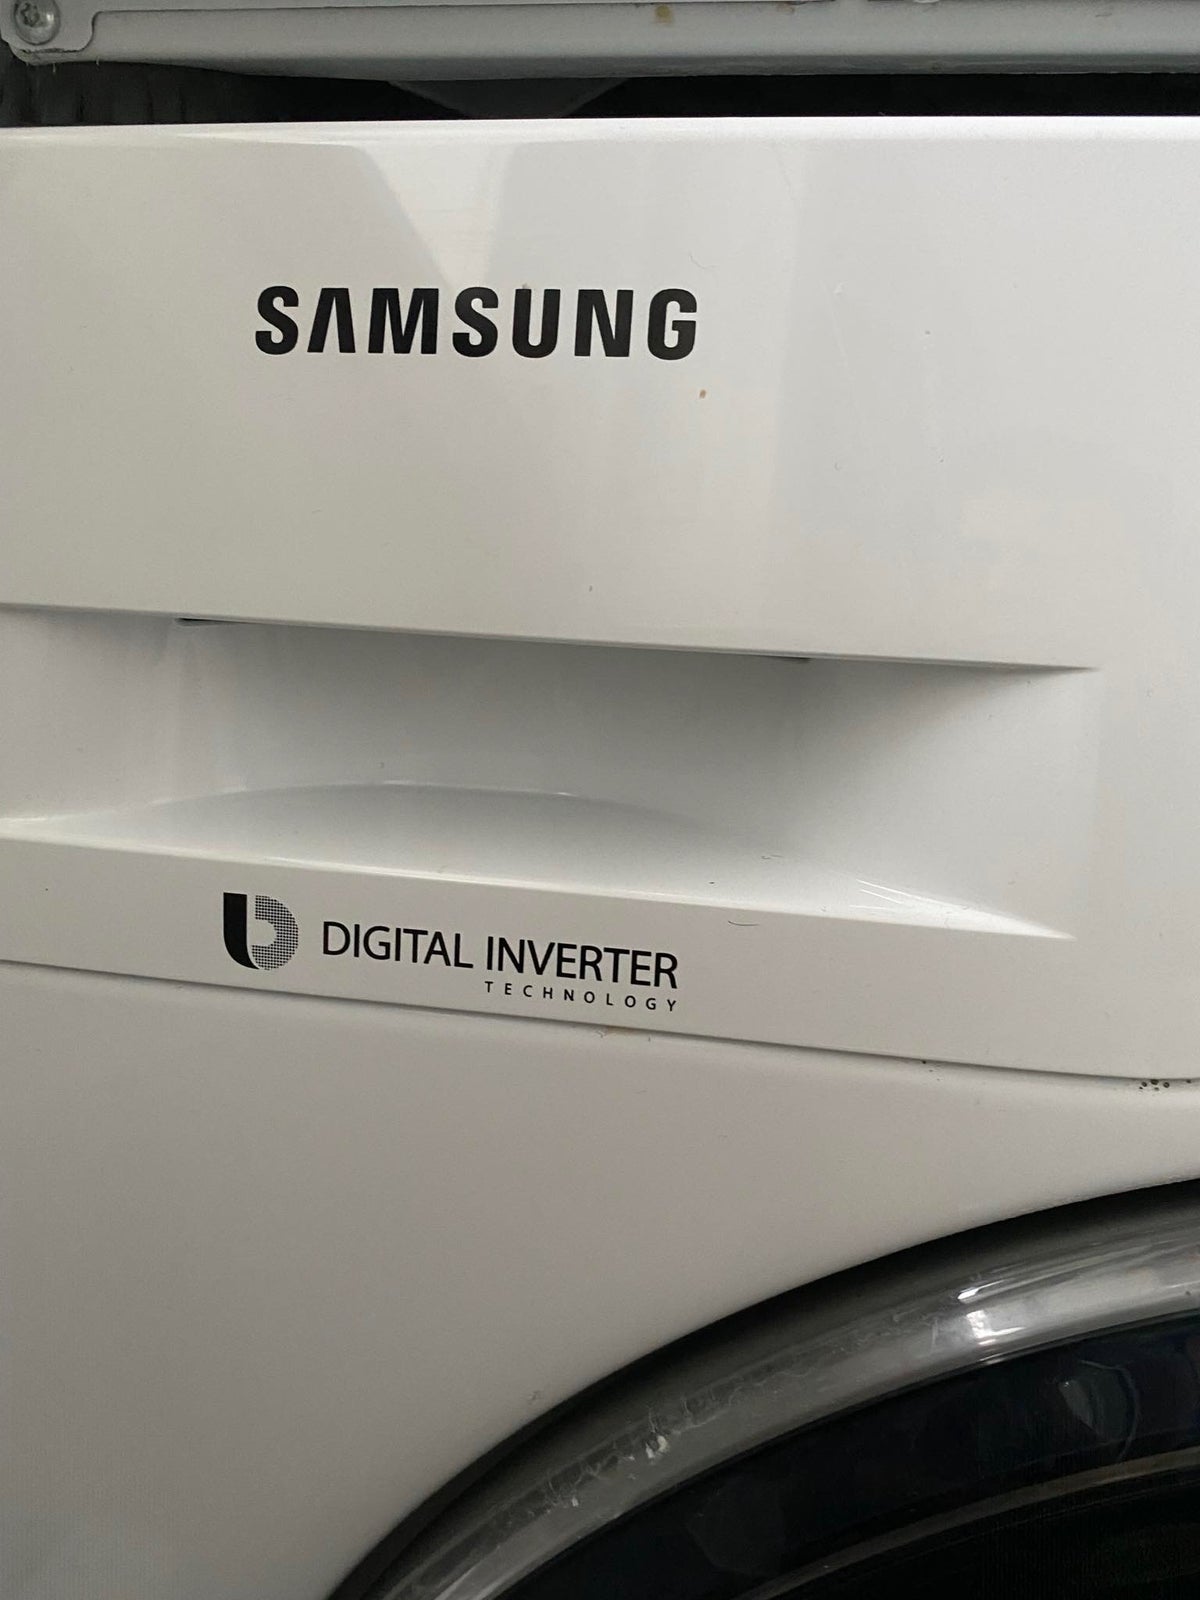 Samsung vaskemaskine, Eco bubble, frontbetjent